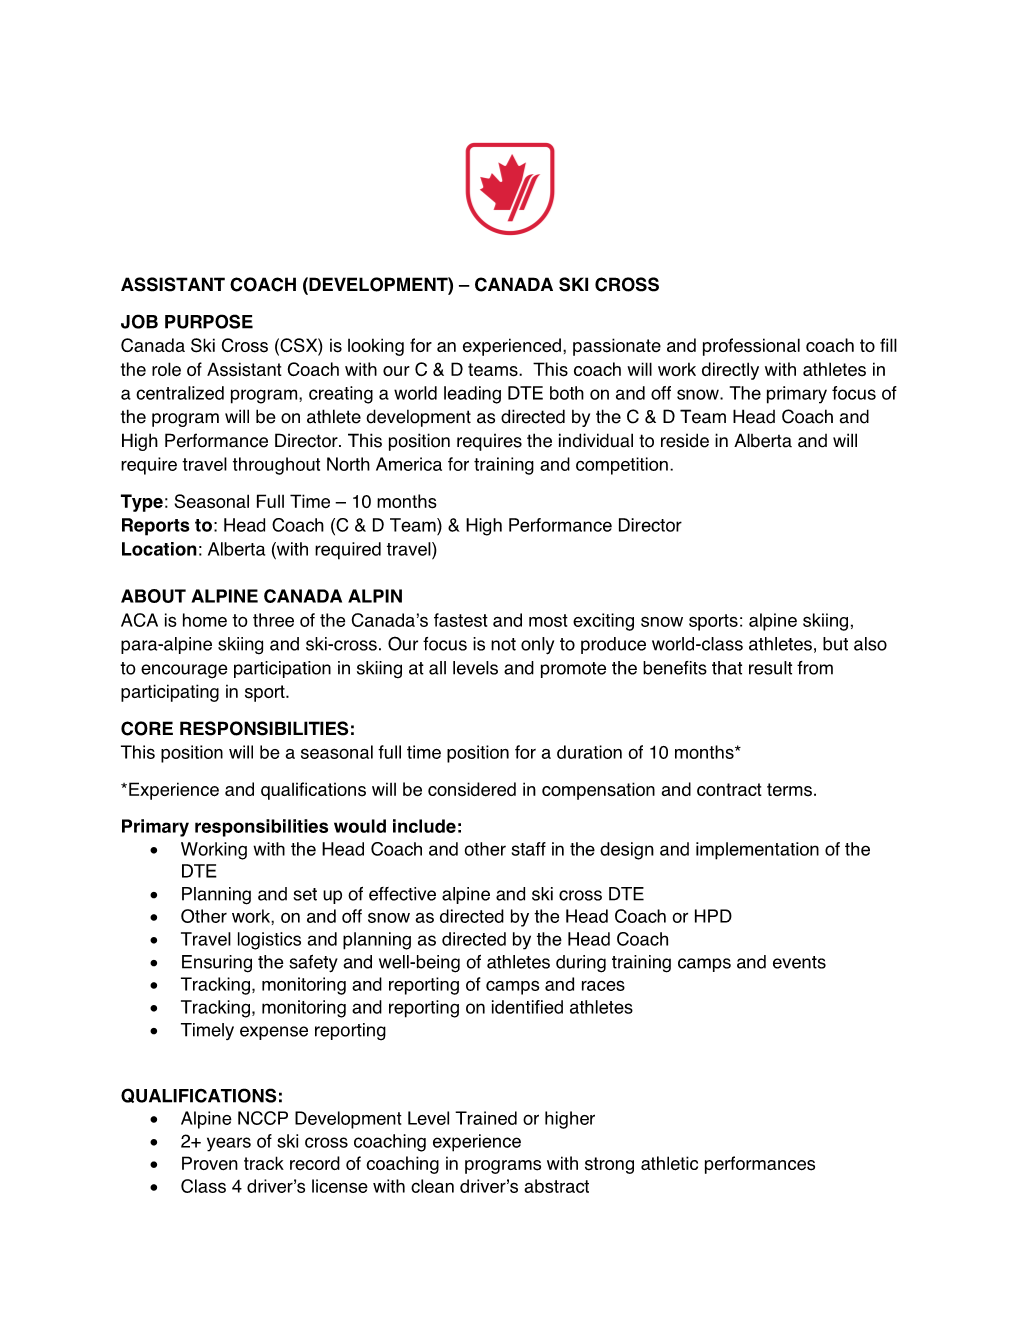 Assistant Coach (Development) – Canada Ski Cross